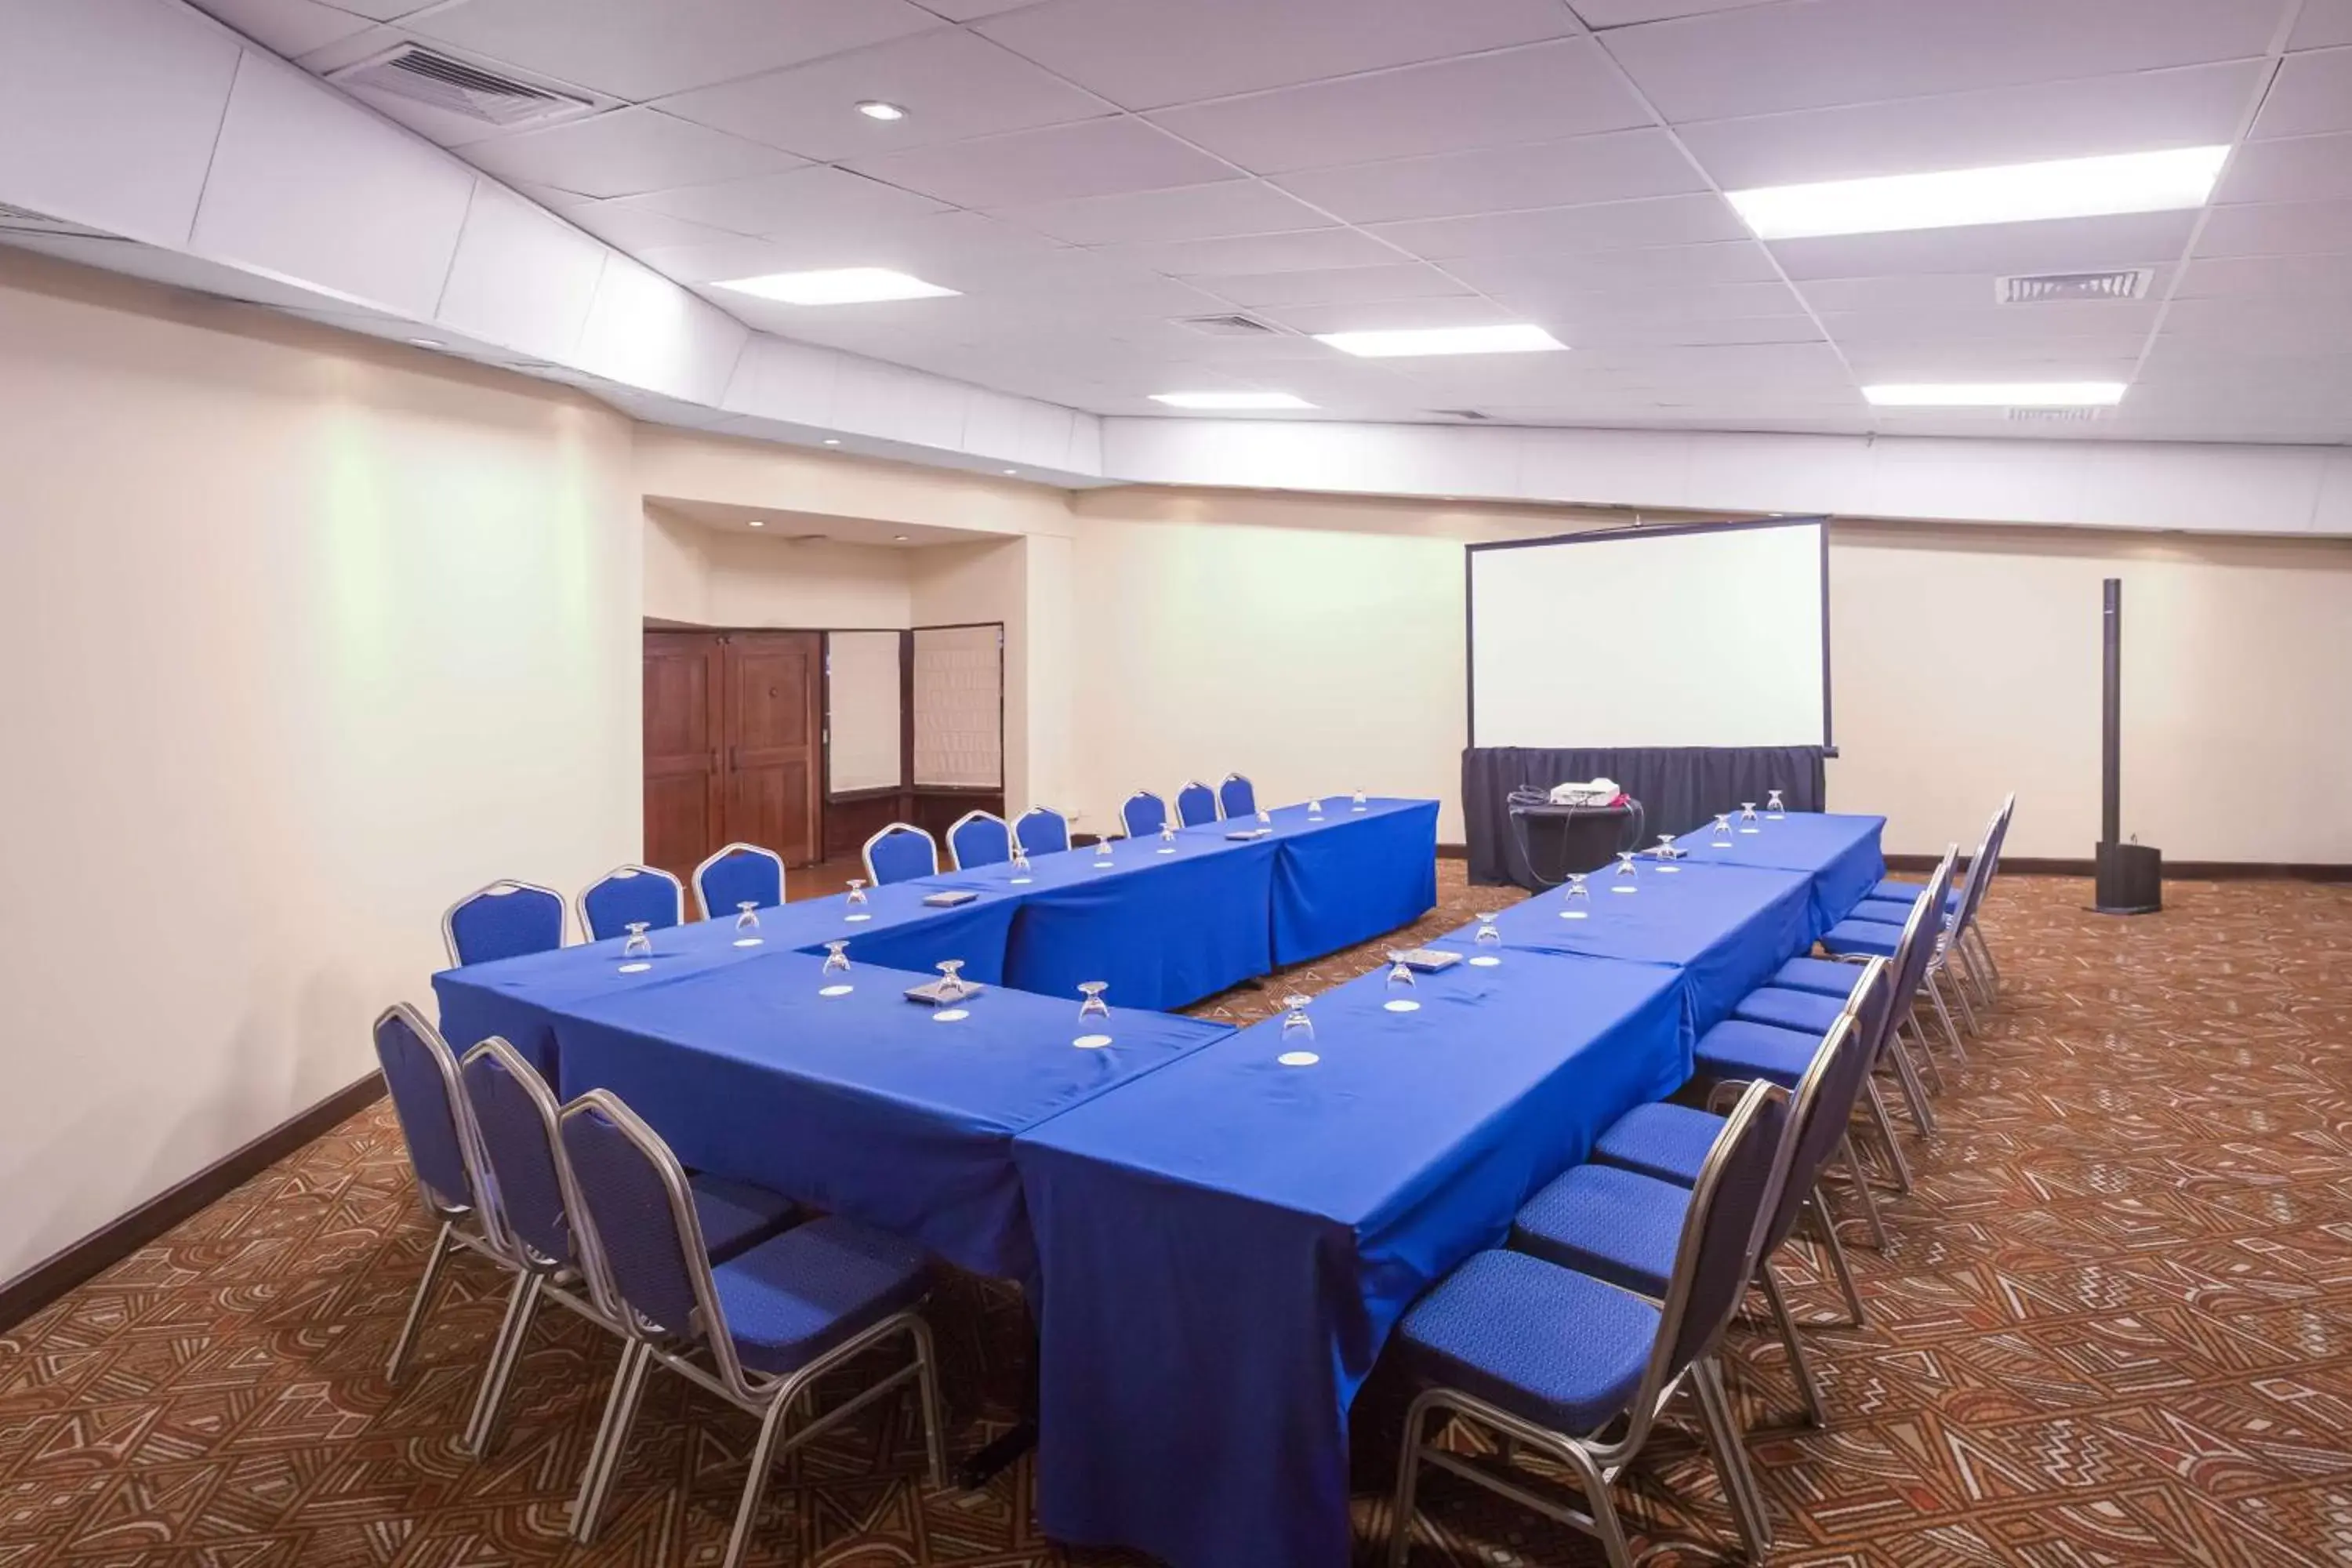 Meeting/conference room in Hilton Cariari DoubleTree San Jose - Costa Rica